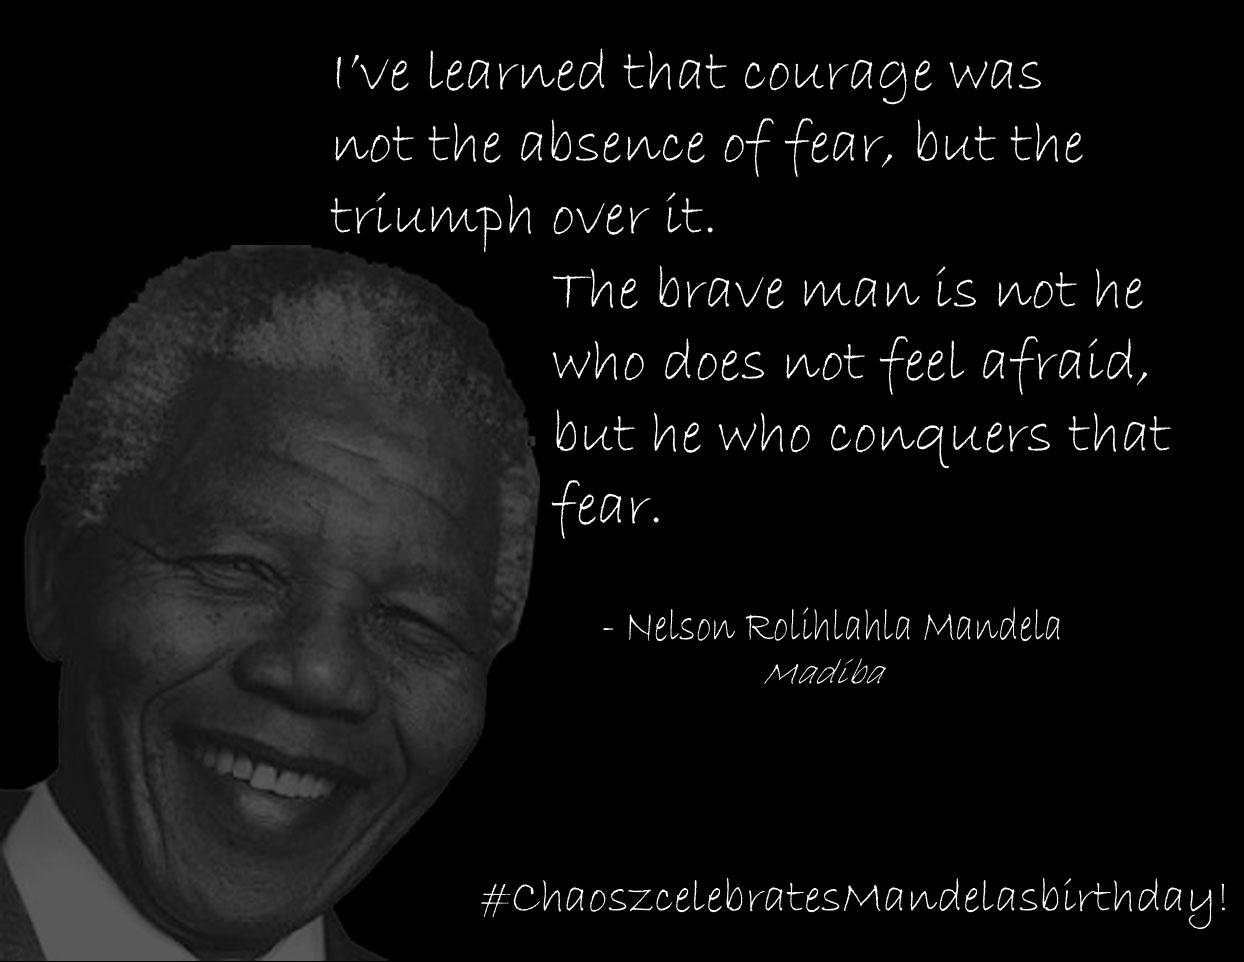 Inspiring words of Nelson Mandela.We can all